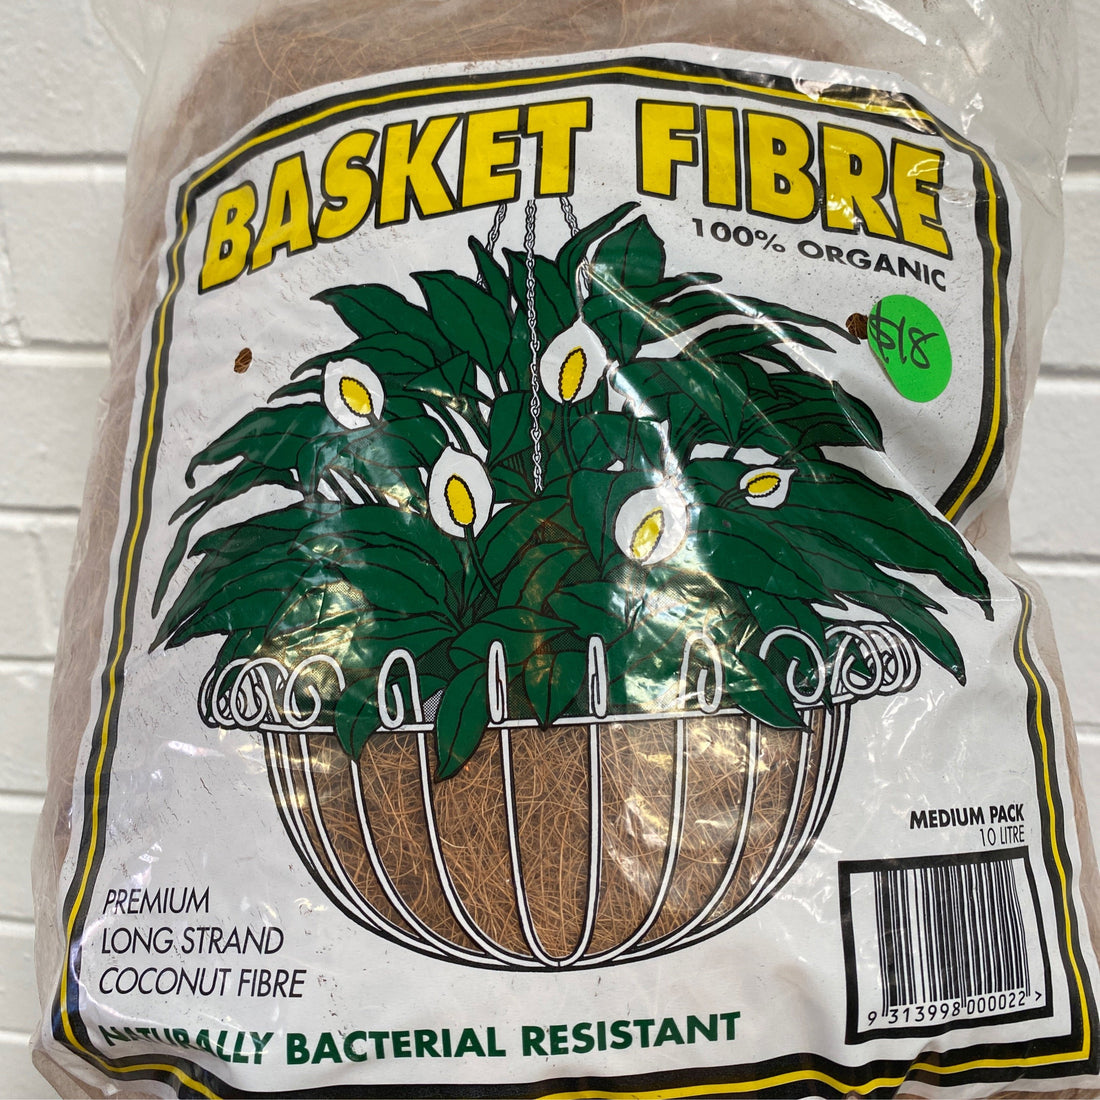 Basket Fibre